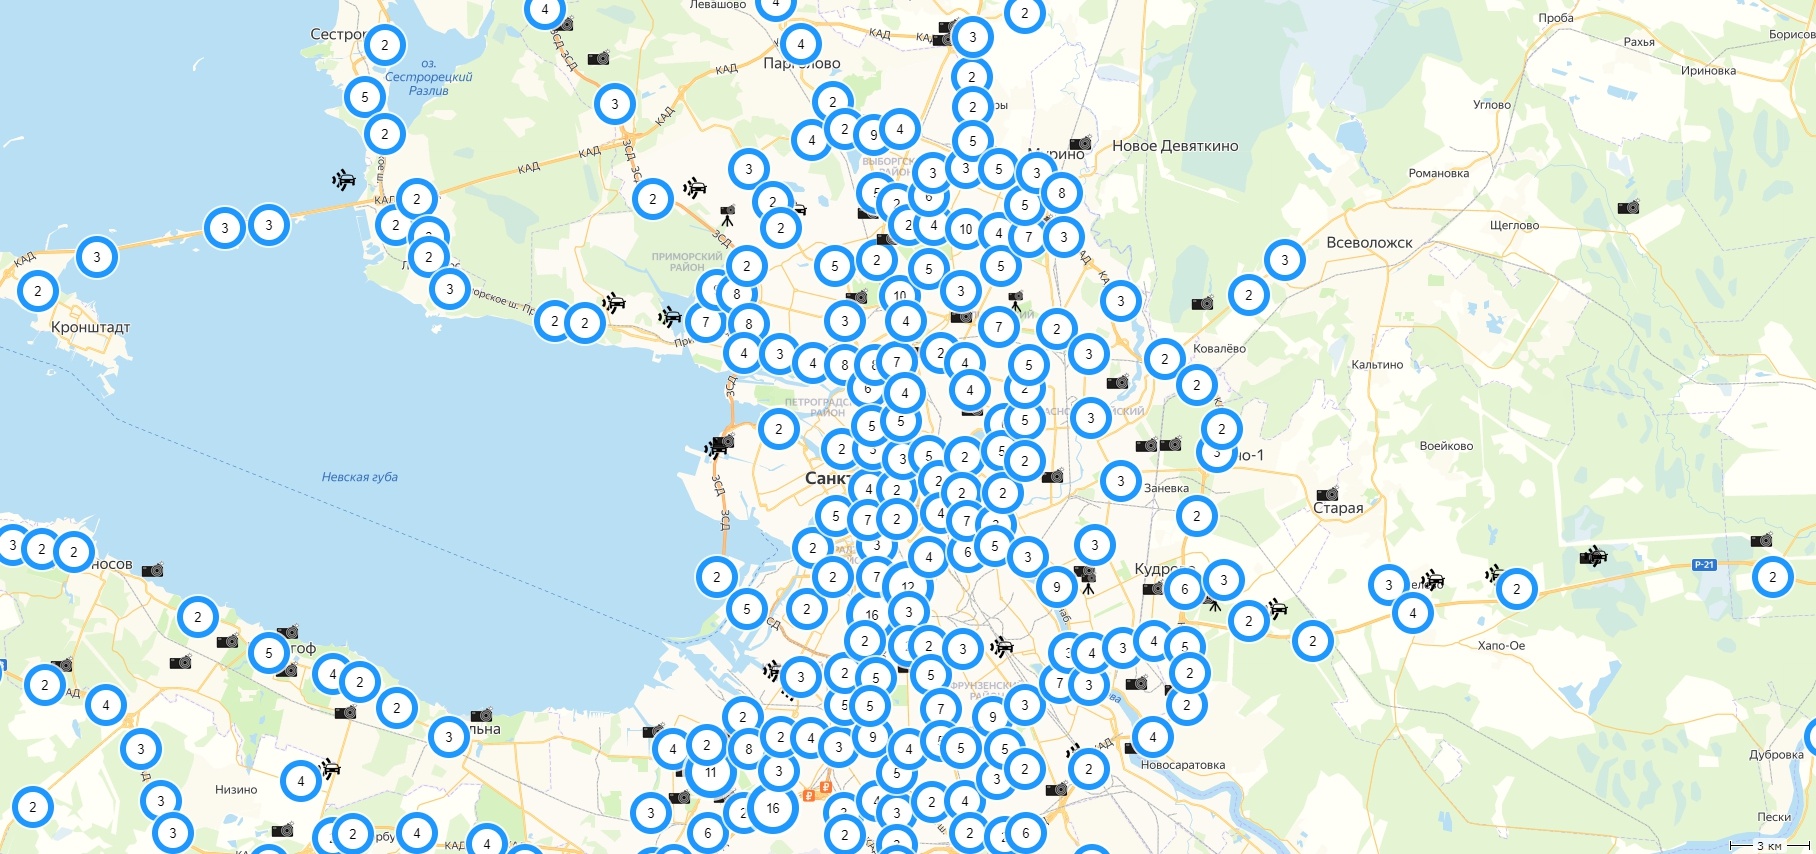 Камеры ГИБДД в Санкт-Петербурге на карте 2021 года — Пробки Онлайн